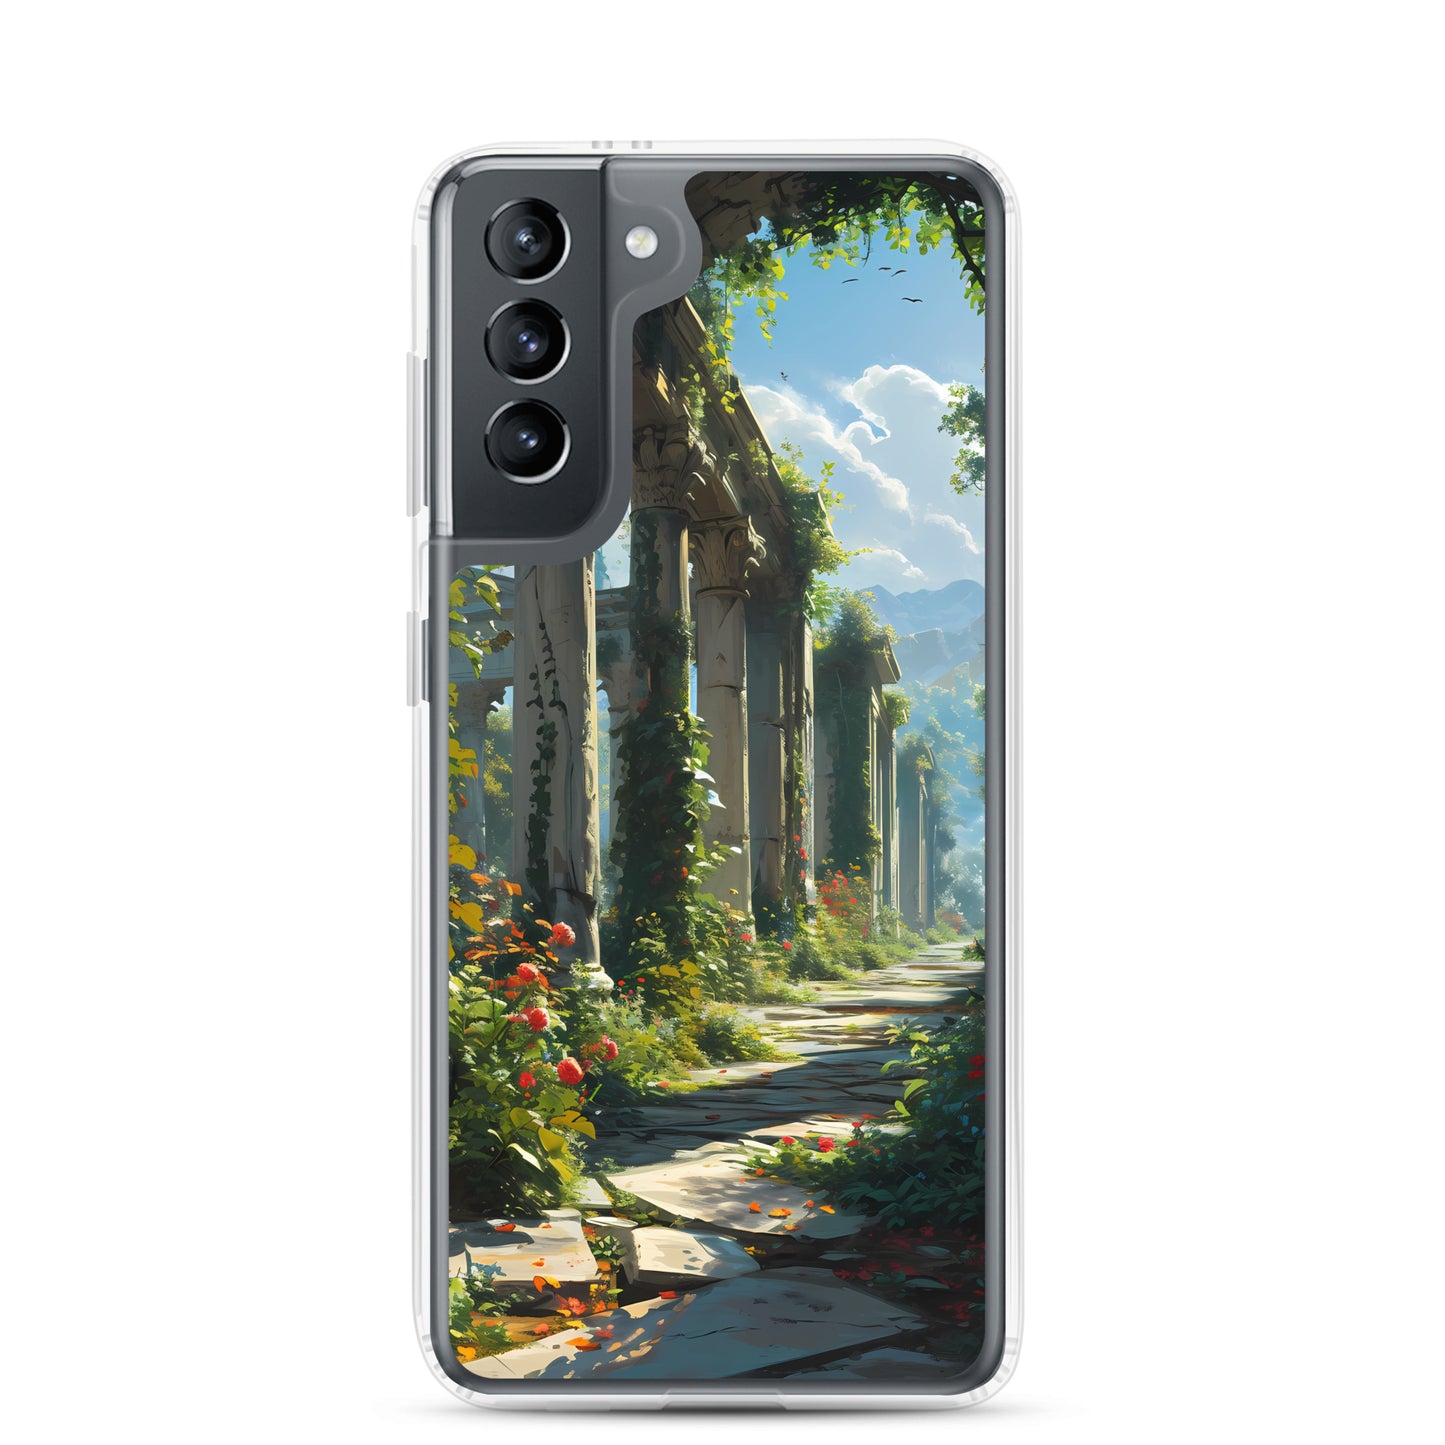 Samsung Case - Heavenly Atrium